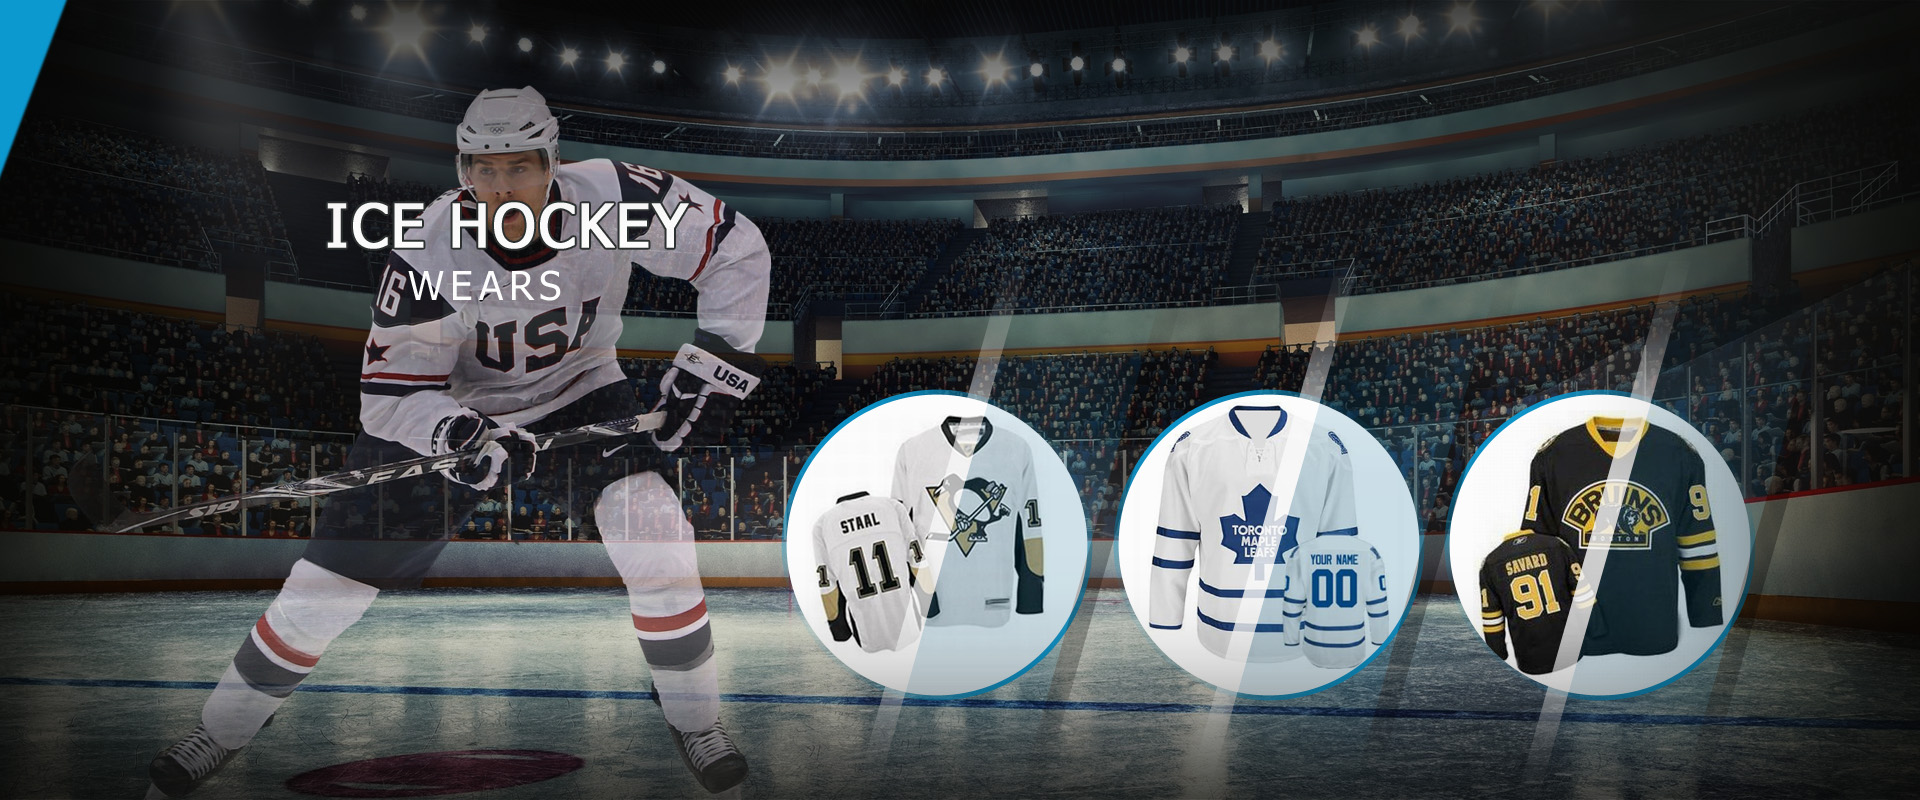 Ice Hockey Uniforms Banner